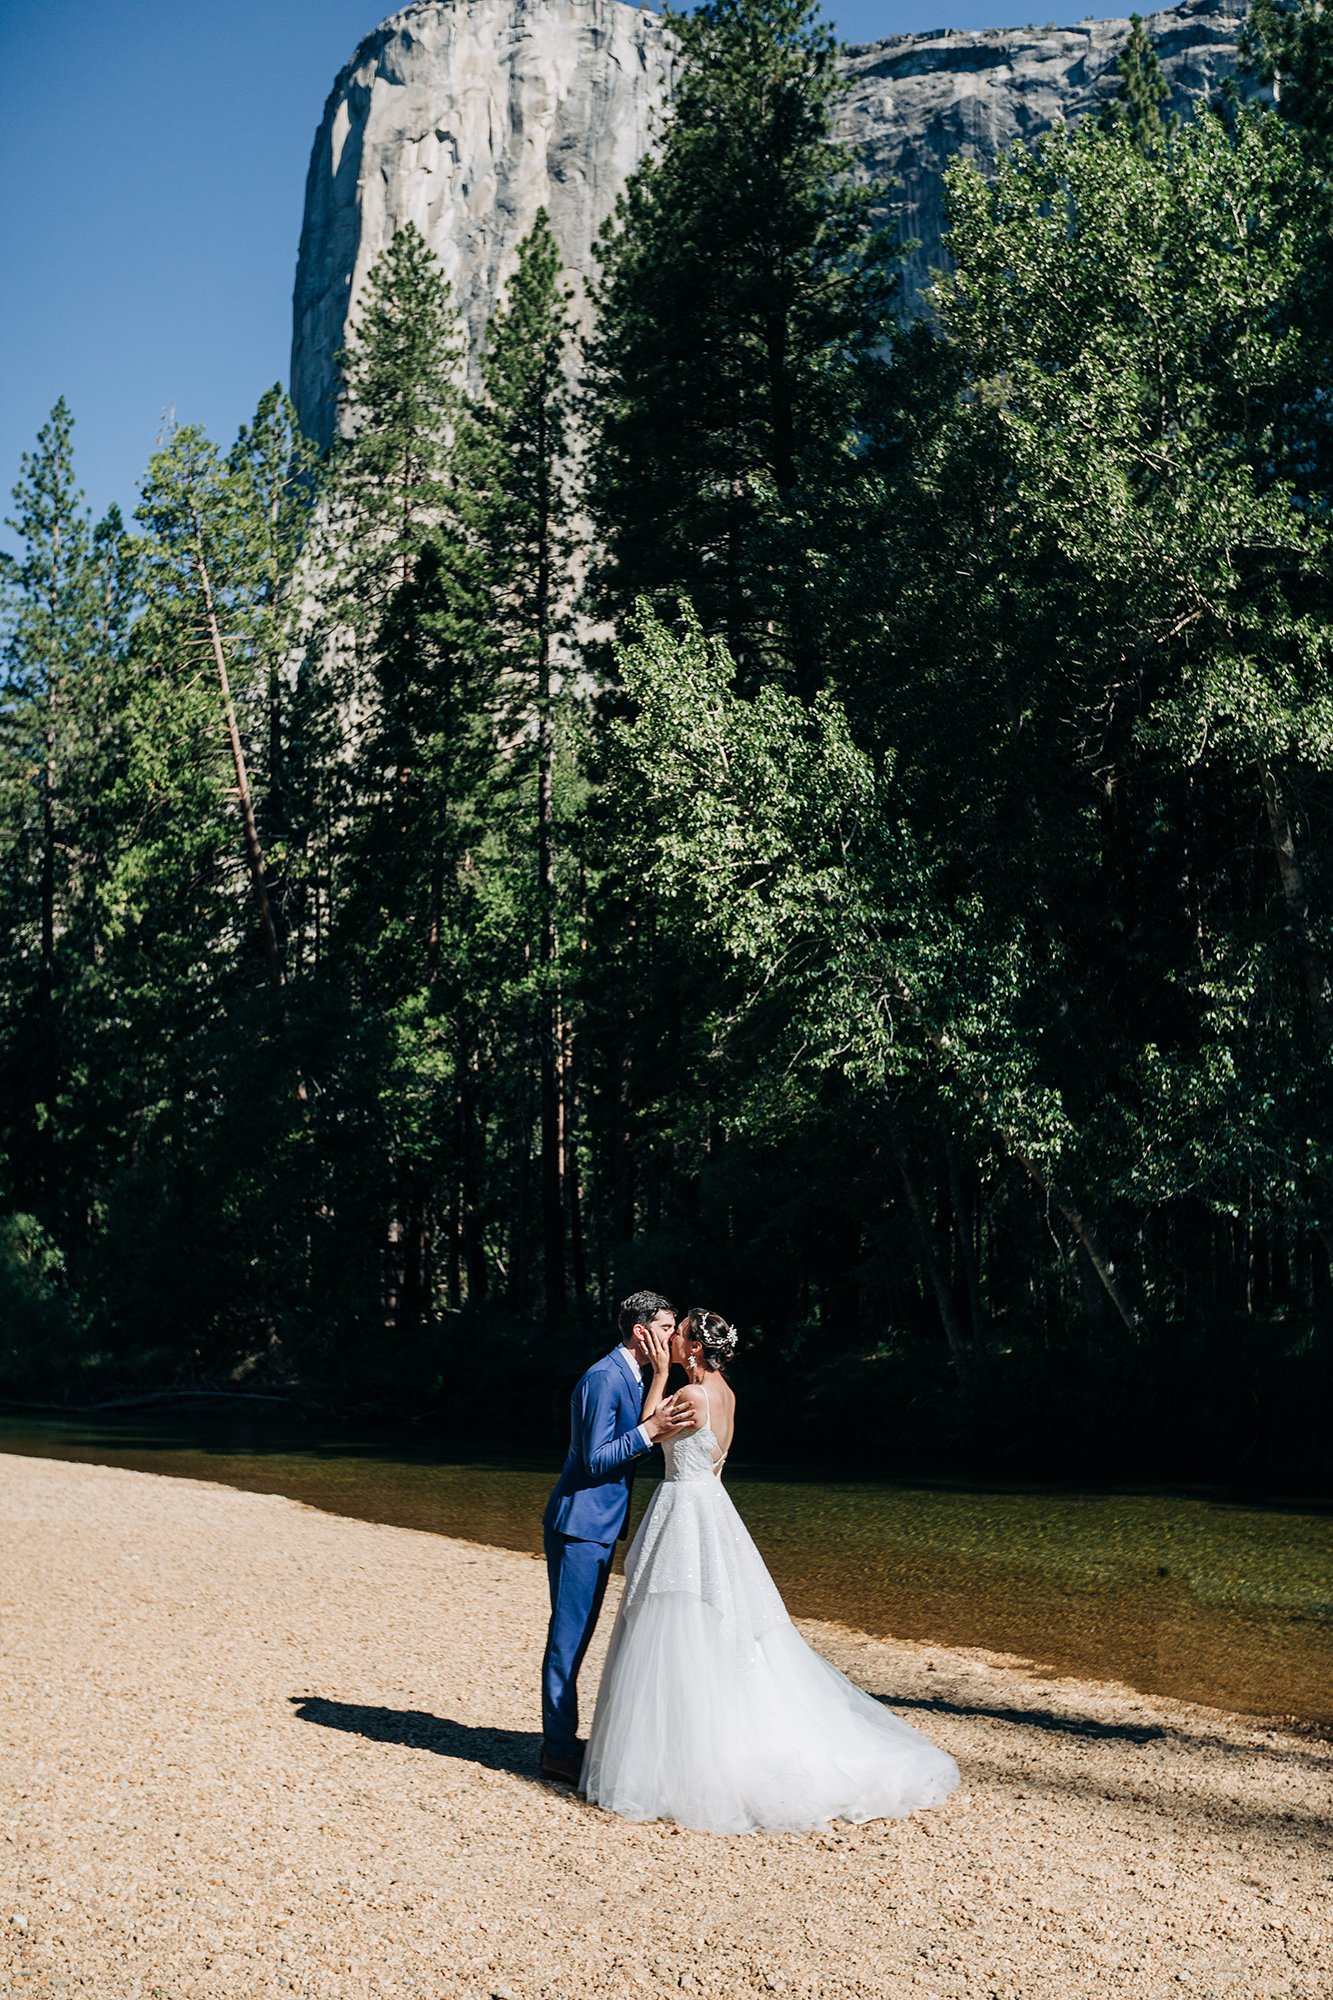 Yooree and Jarrod's wedding ceremony in Yosemite National Park.